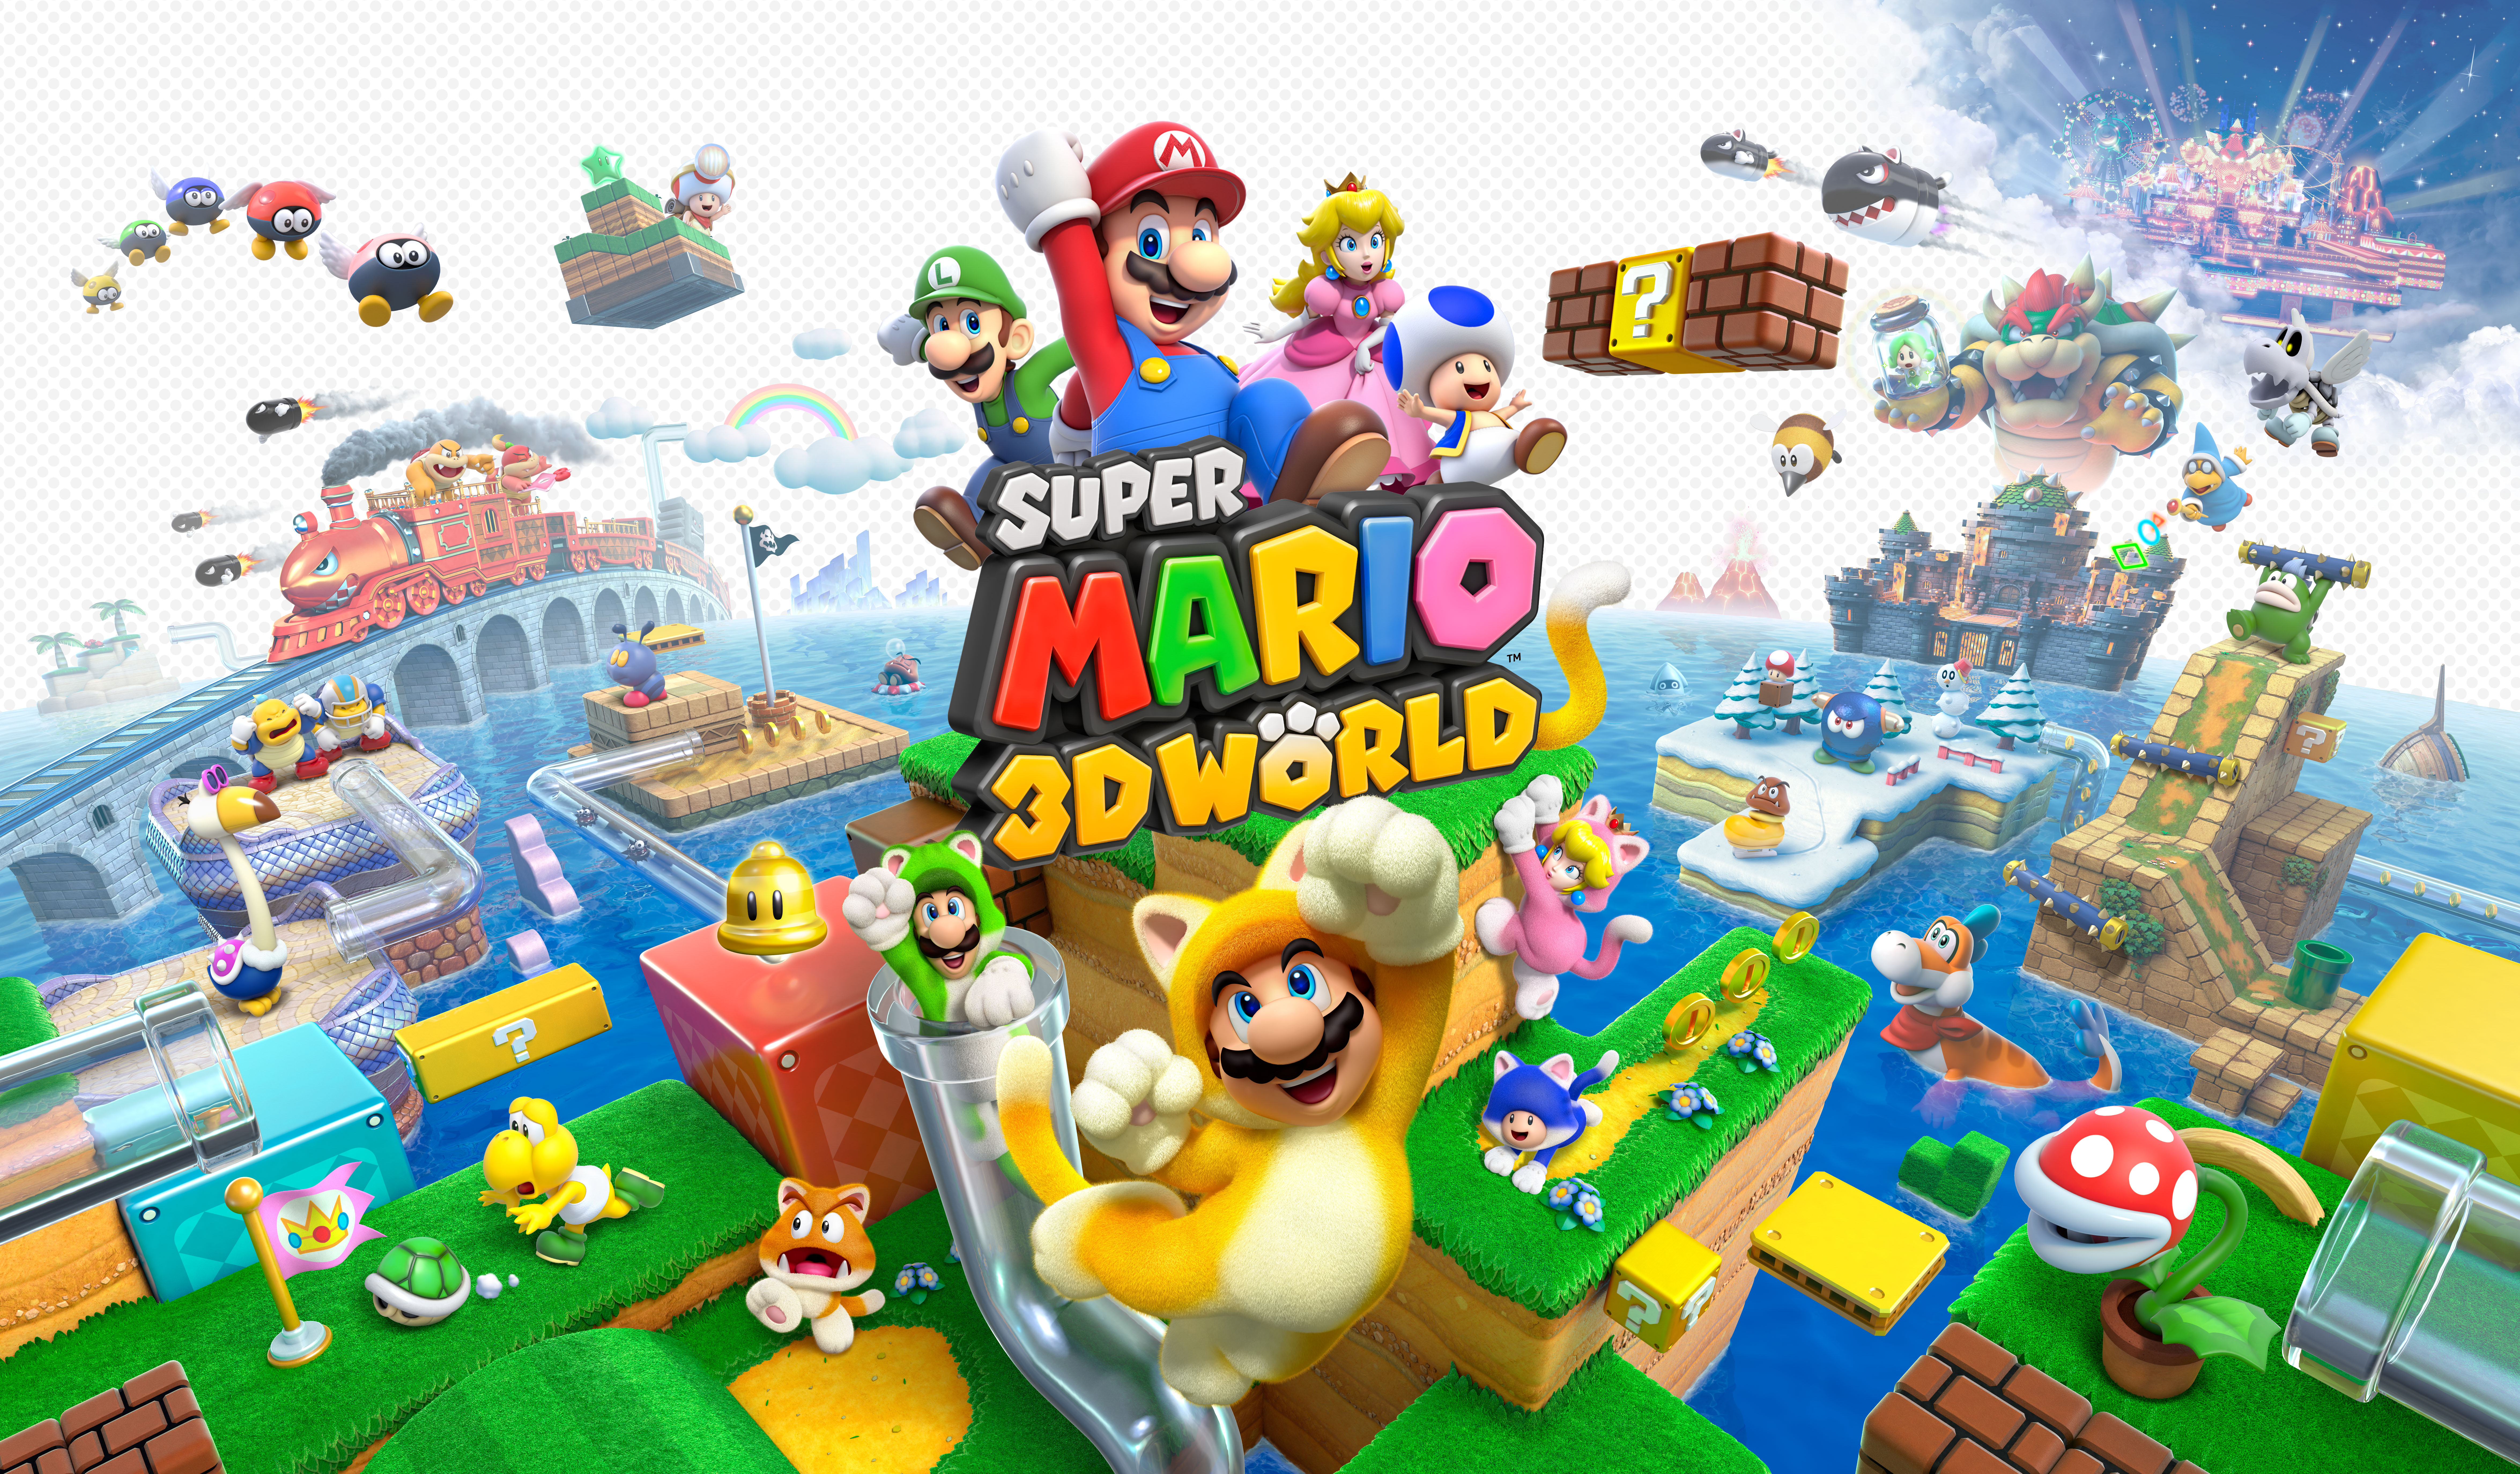 Grand_Group_Artwork_-_Super_Mario_3D_World.jpg